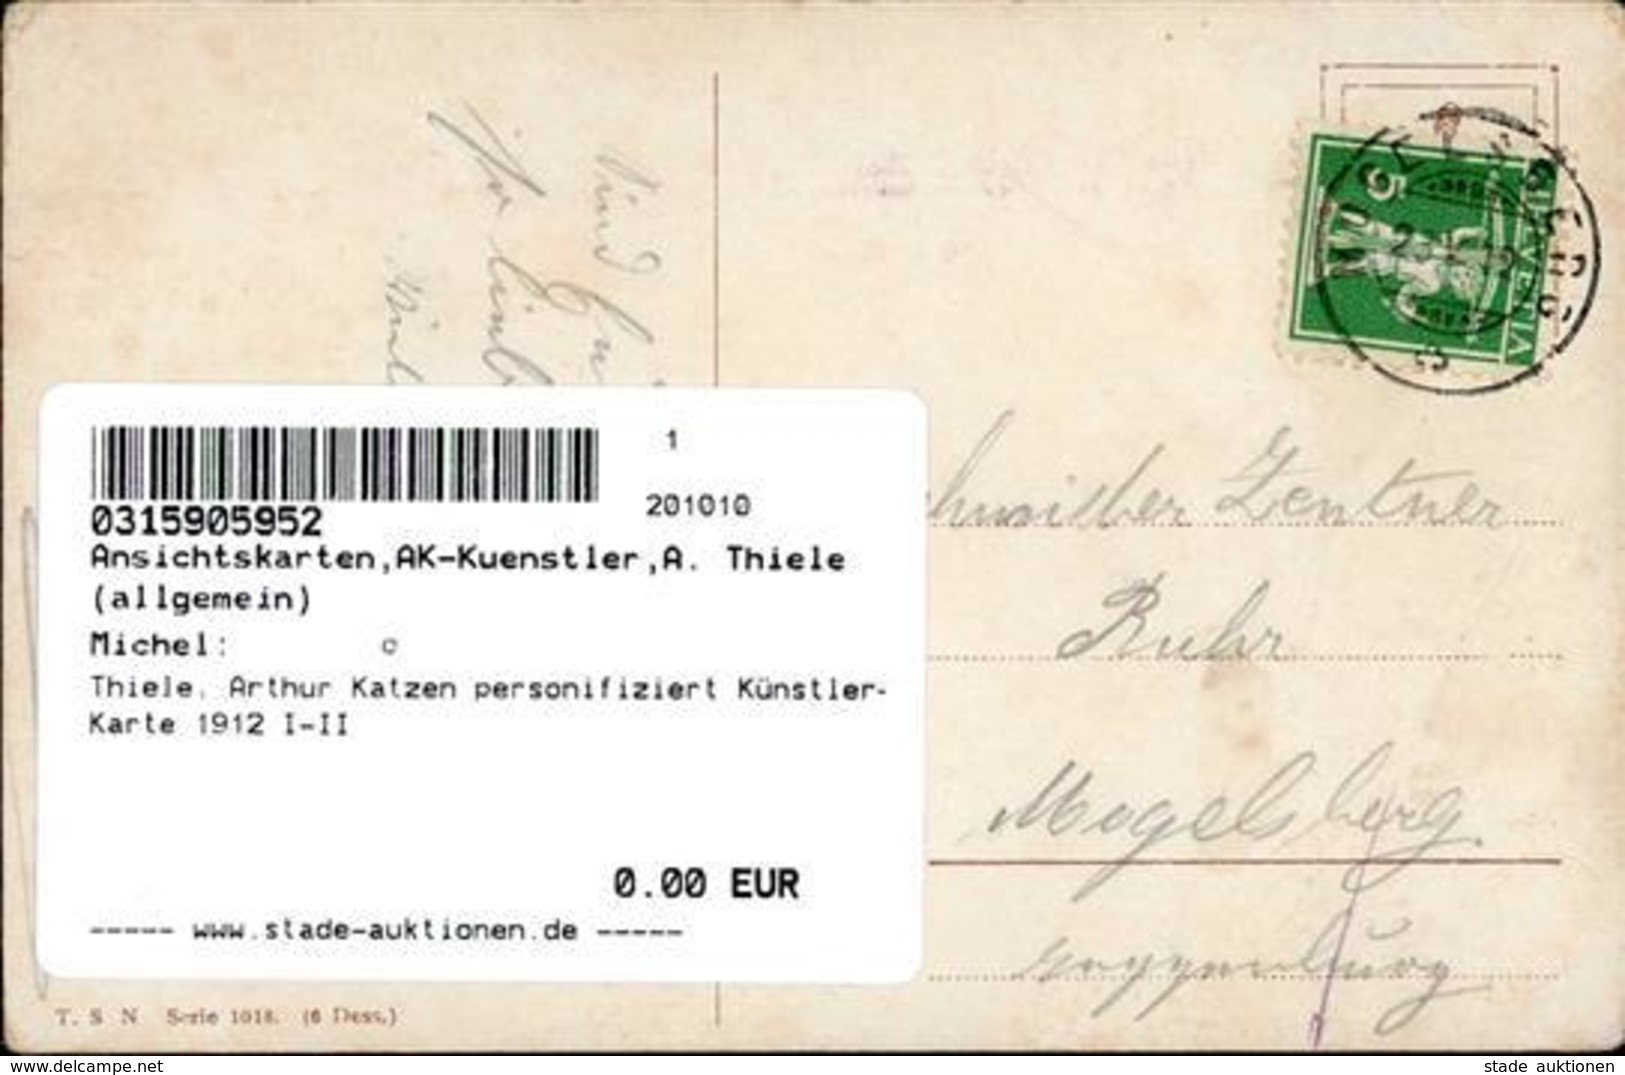 Thiele, Arthur Katzen Personifiziert Künstler-Karte 1912 I-II Chat - Thiele, Arthur